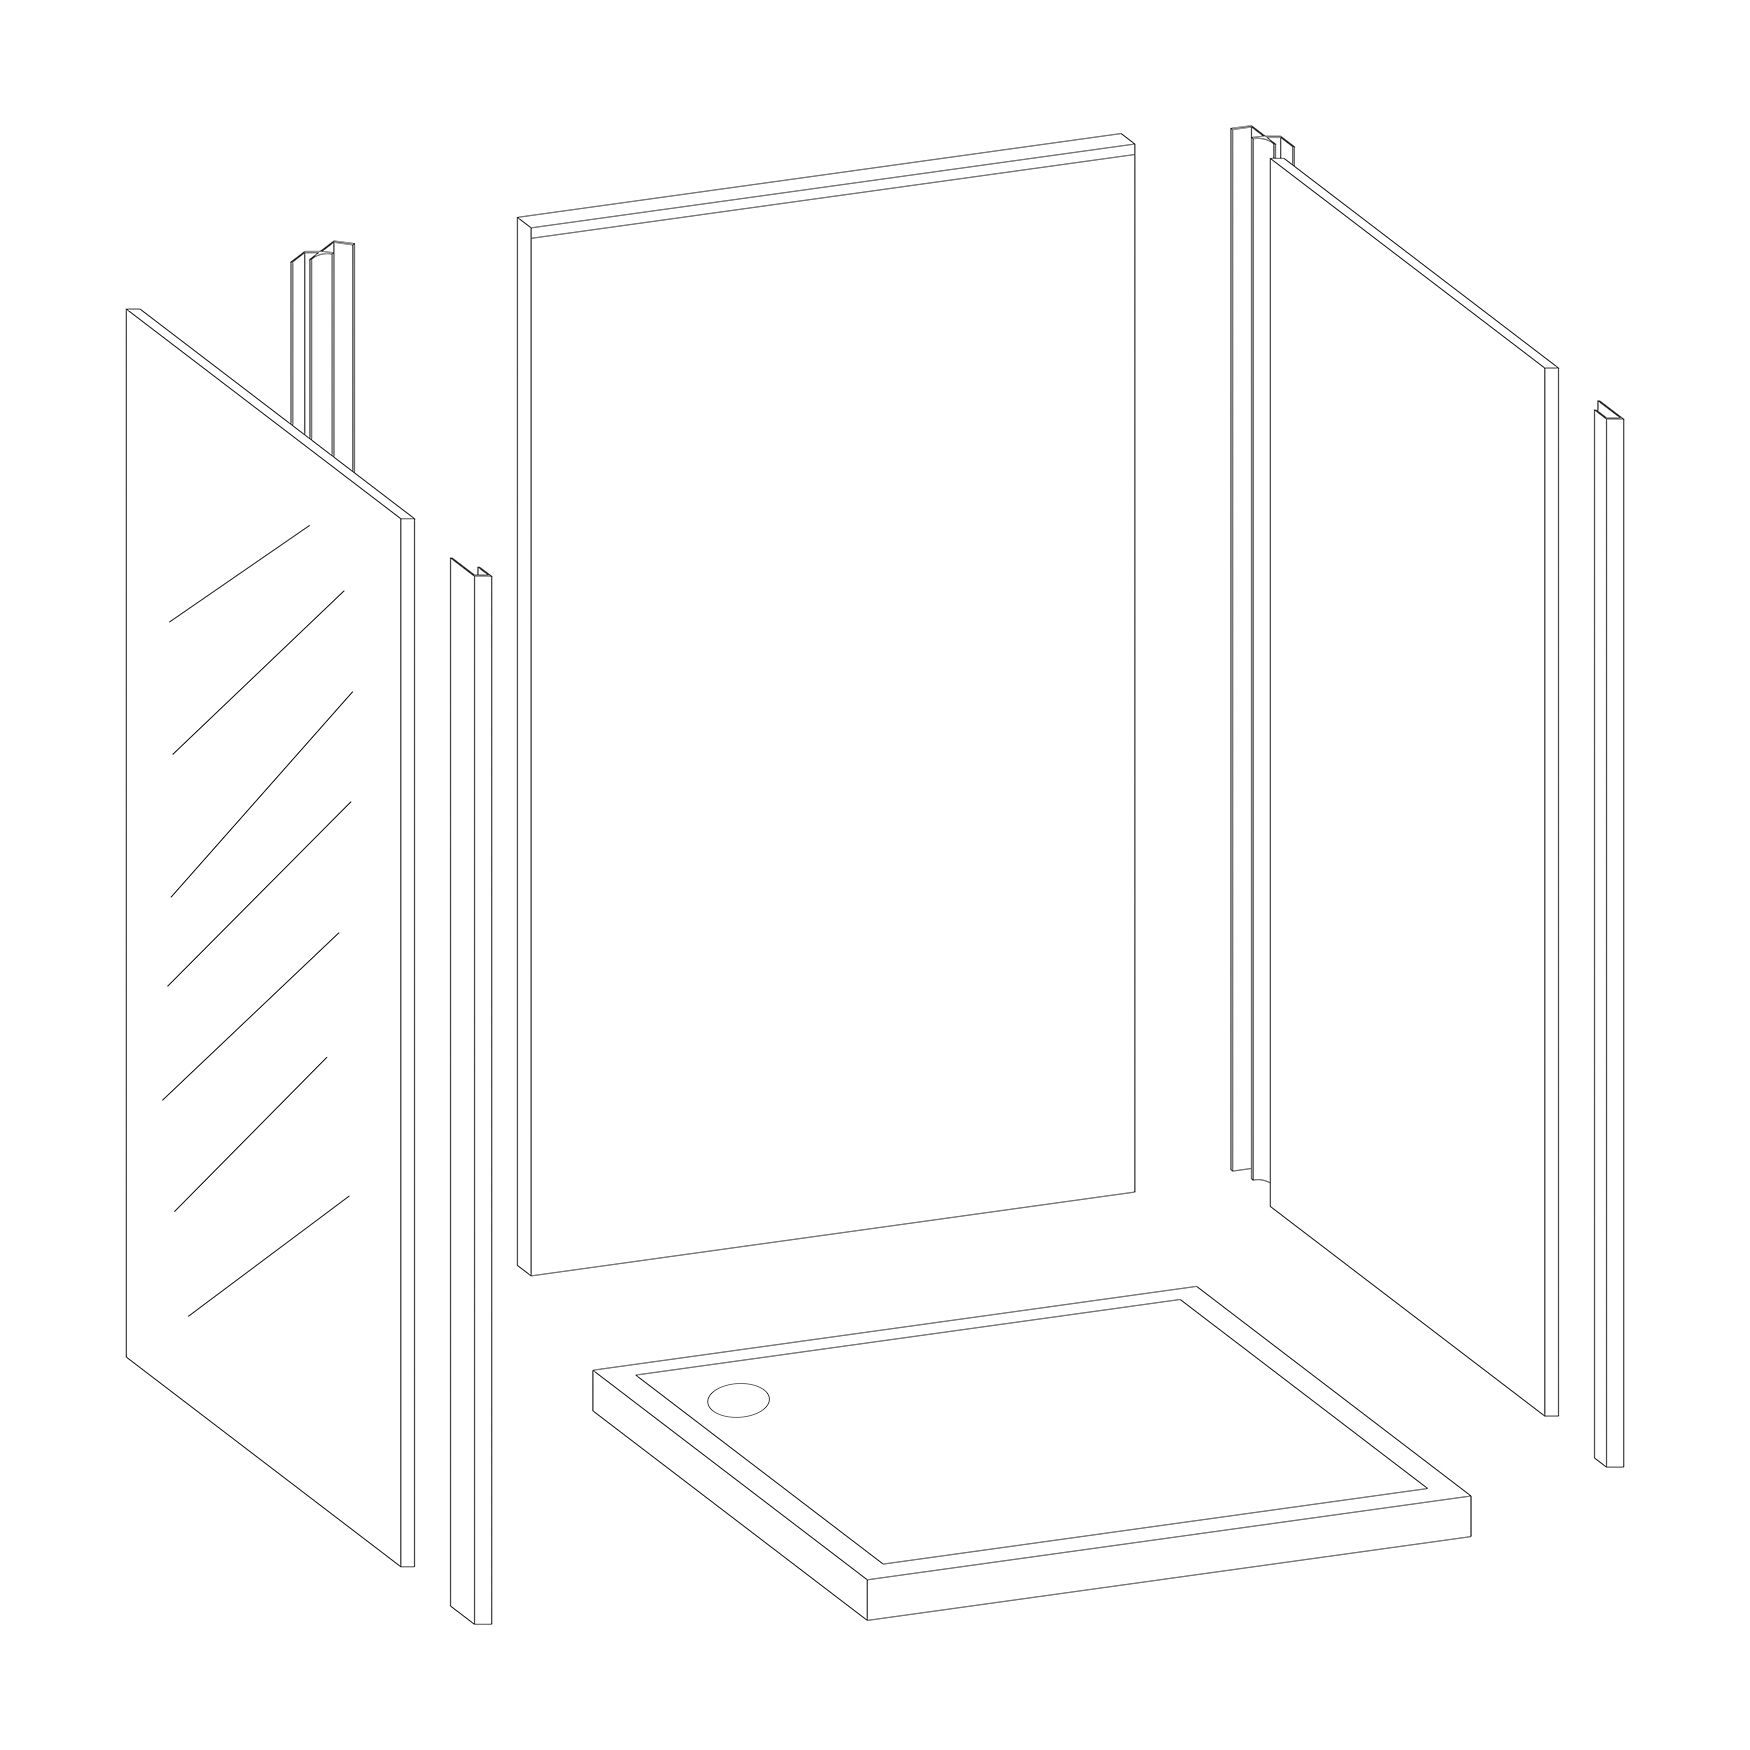 Splashwall Gloss Lime 3 sided Shower Panel kit (L)1200mm (W)1200mm (T)4mm